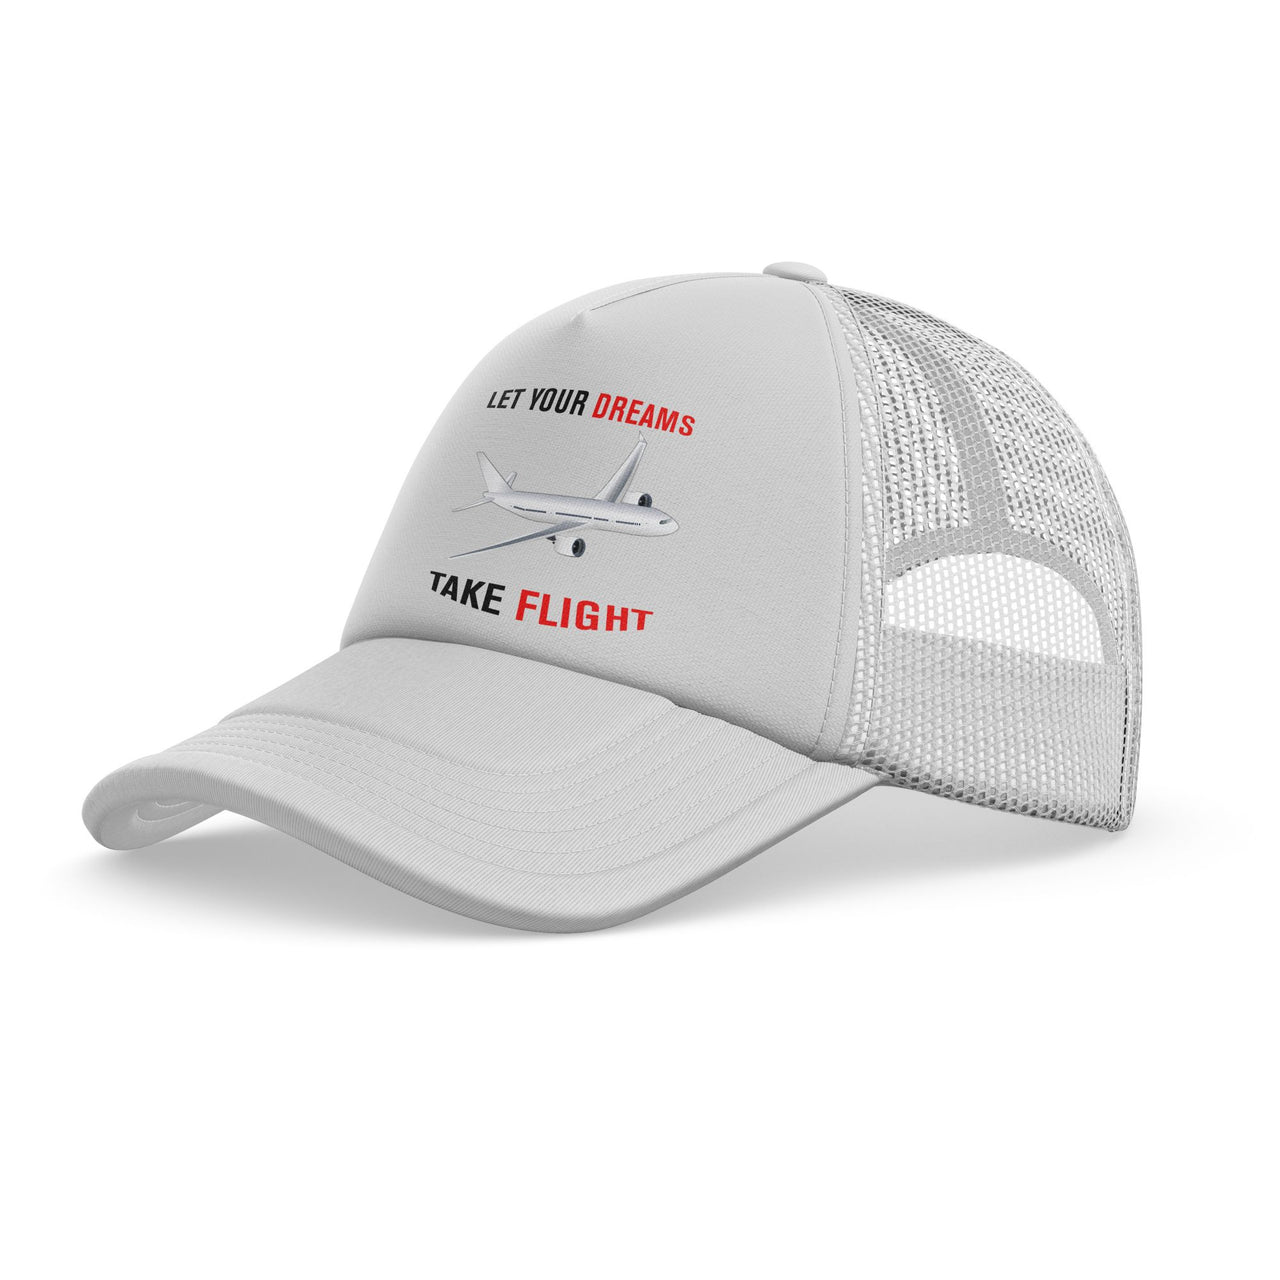 Let Your Dreams Take Flight Designed Trucker Caps & Hats